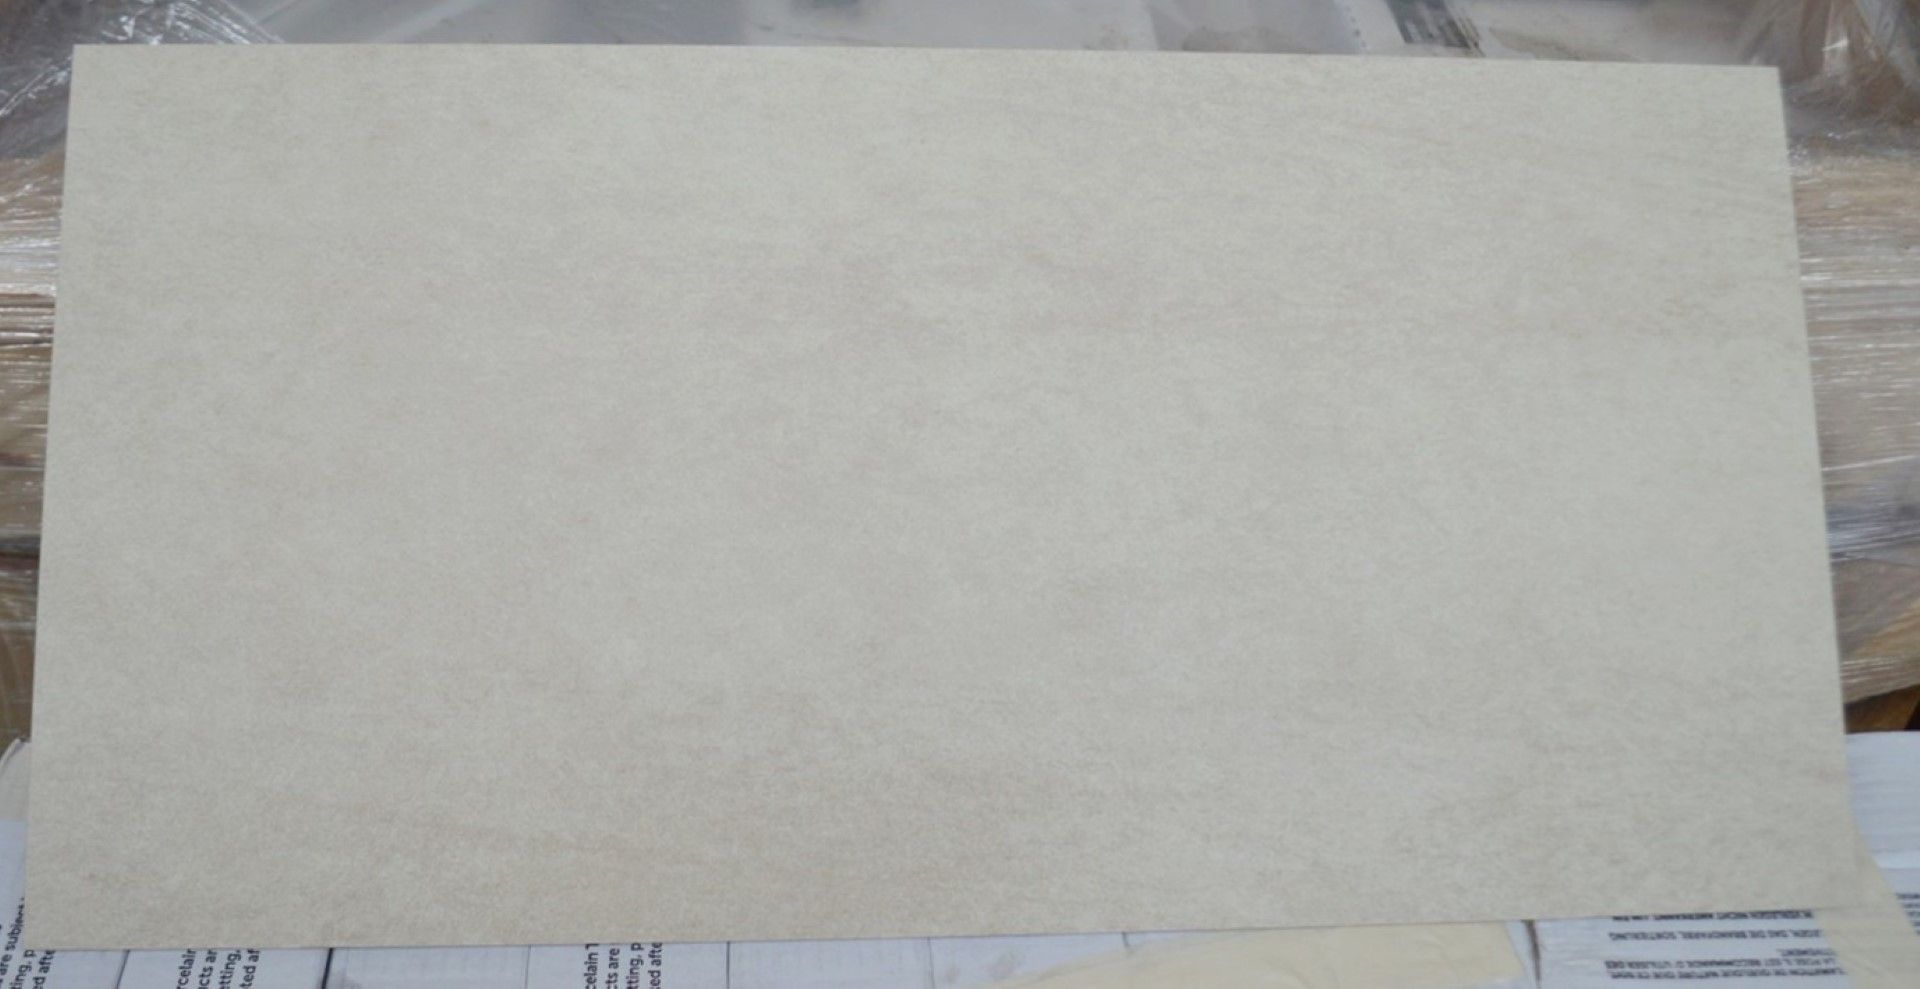 12 x Boxes of RAK Porcelain Floor or Wall Tiles - Concrete Sand Design Design in Beige - 30 x 60 - Image 8 of 8